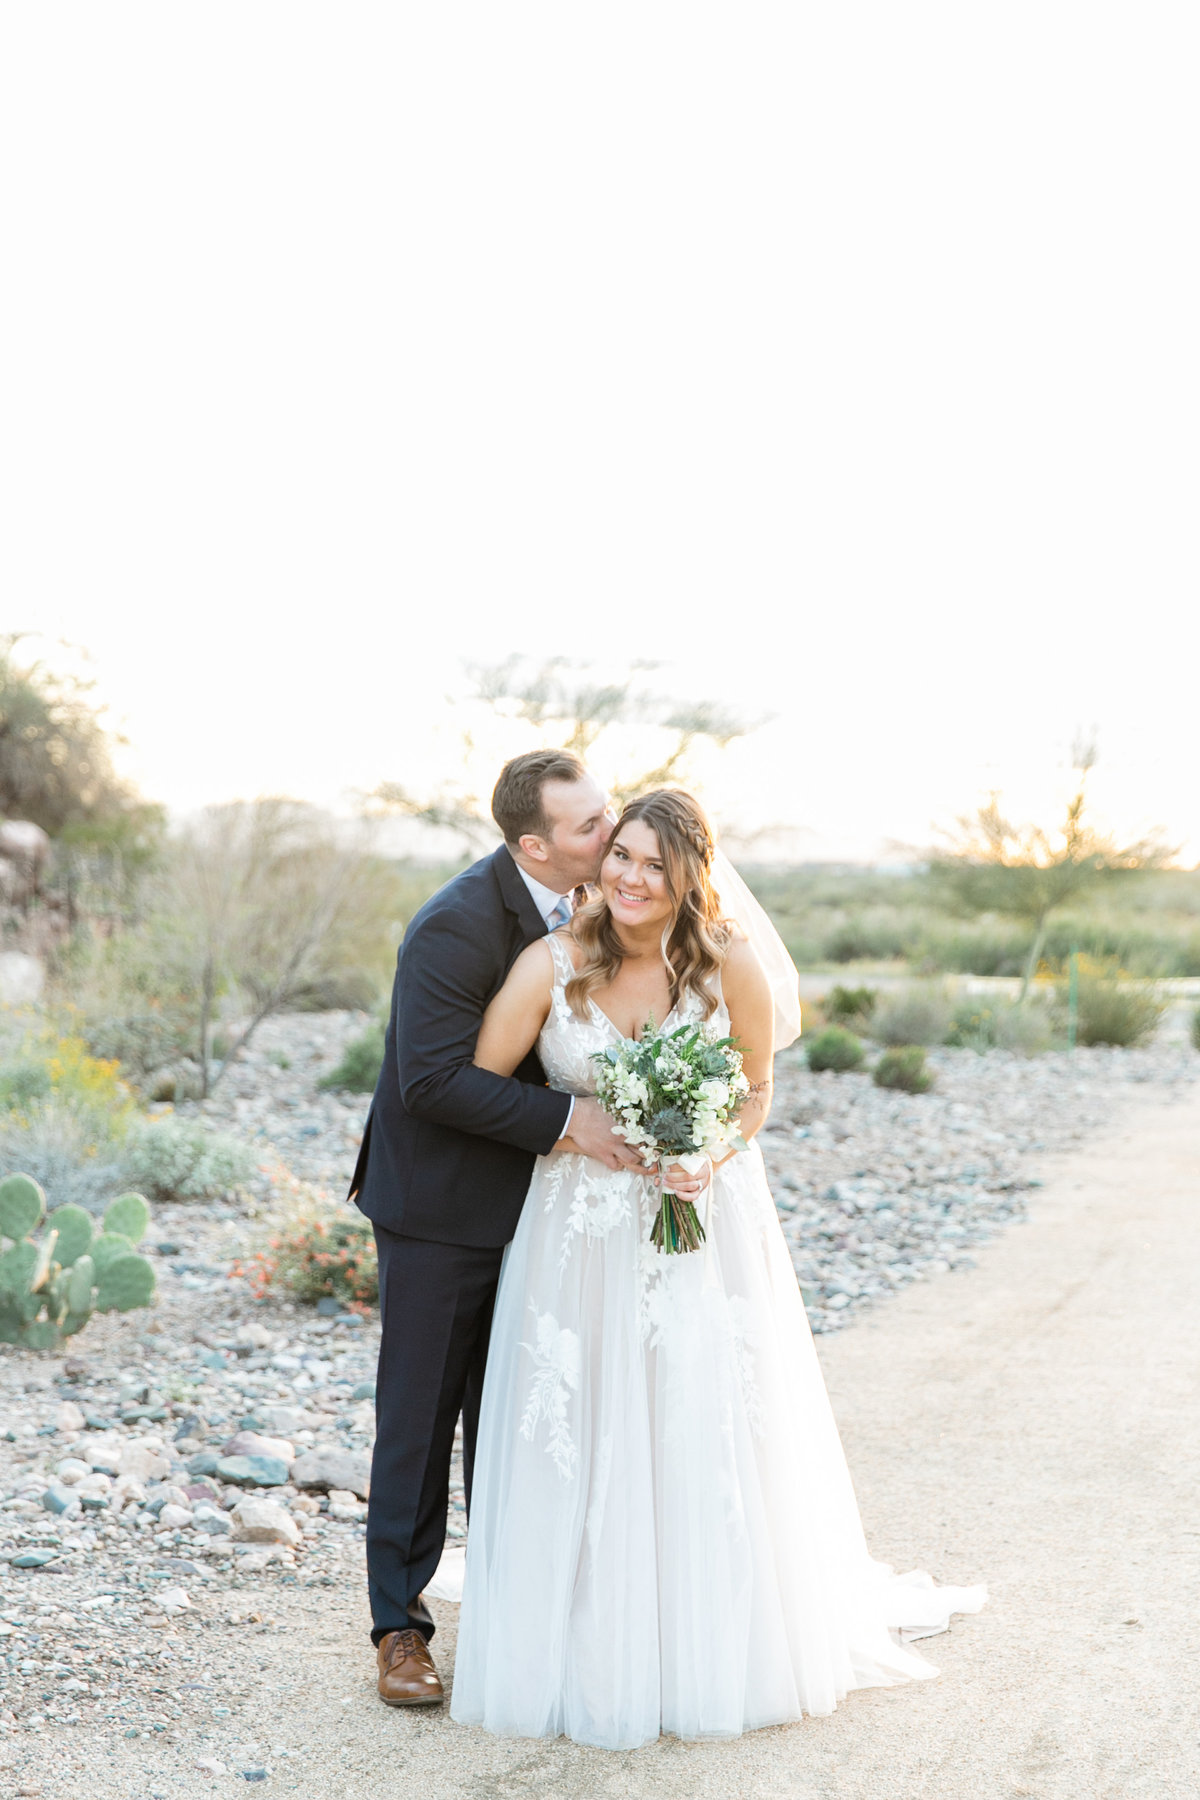 Karlie Colleen Photography - Arizona Backyard wedding - Brittney & Josh-223